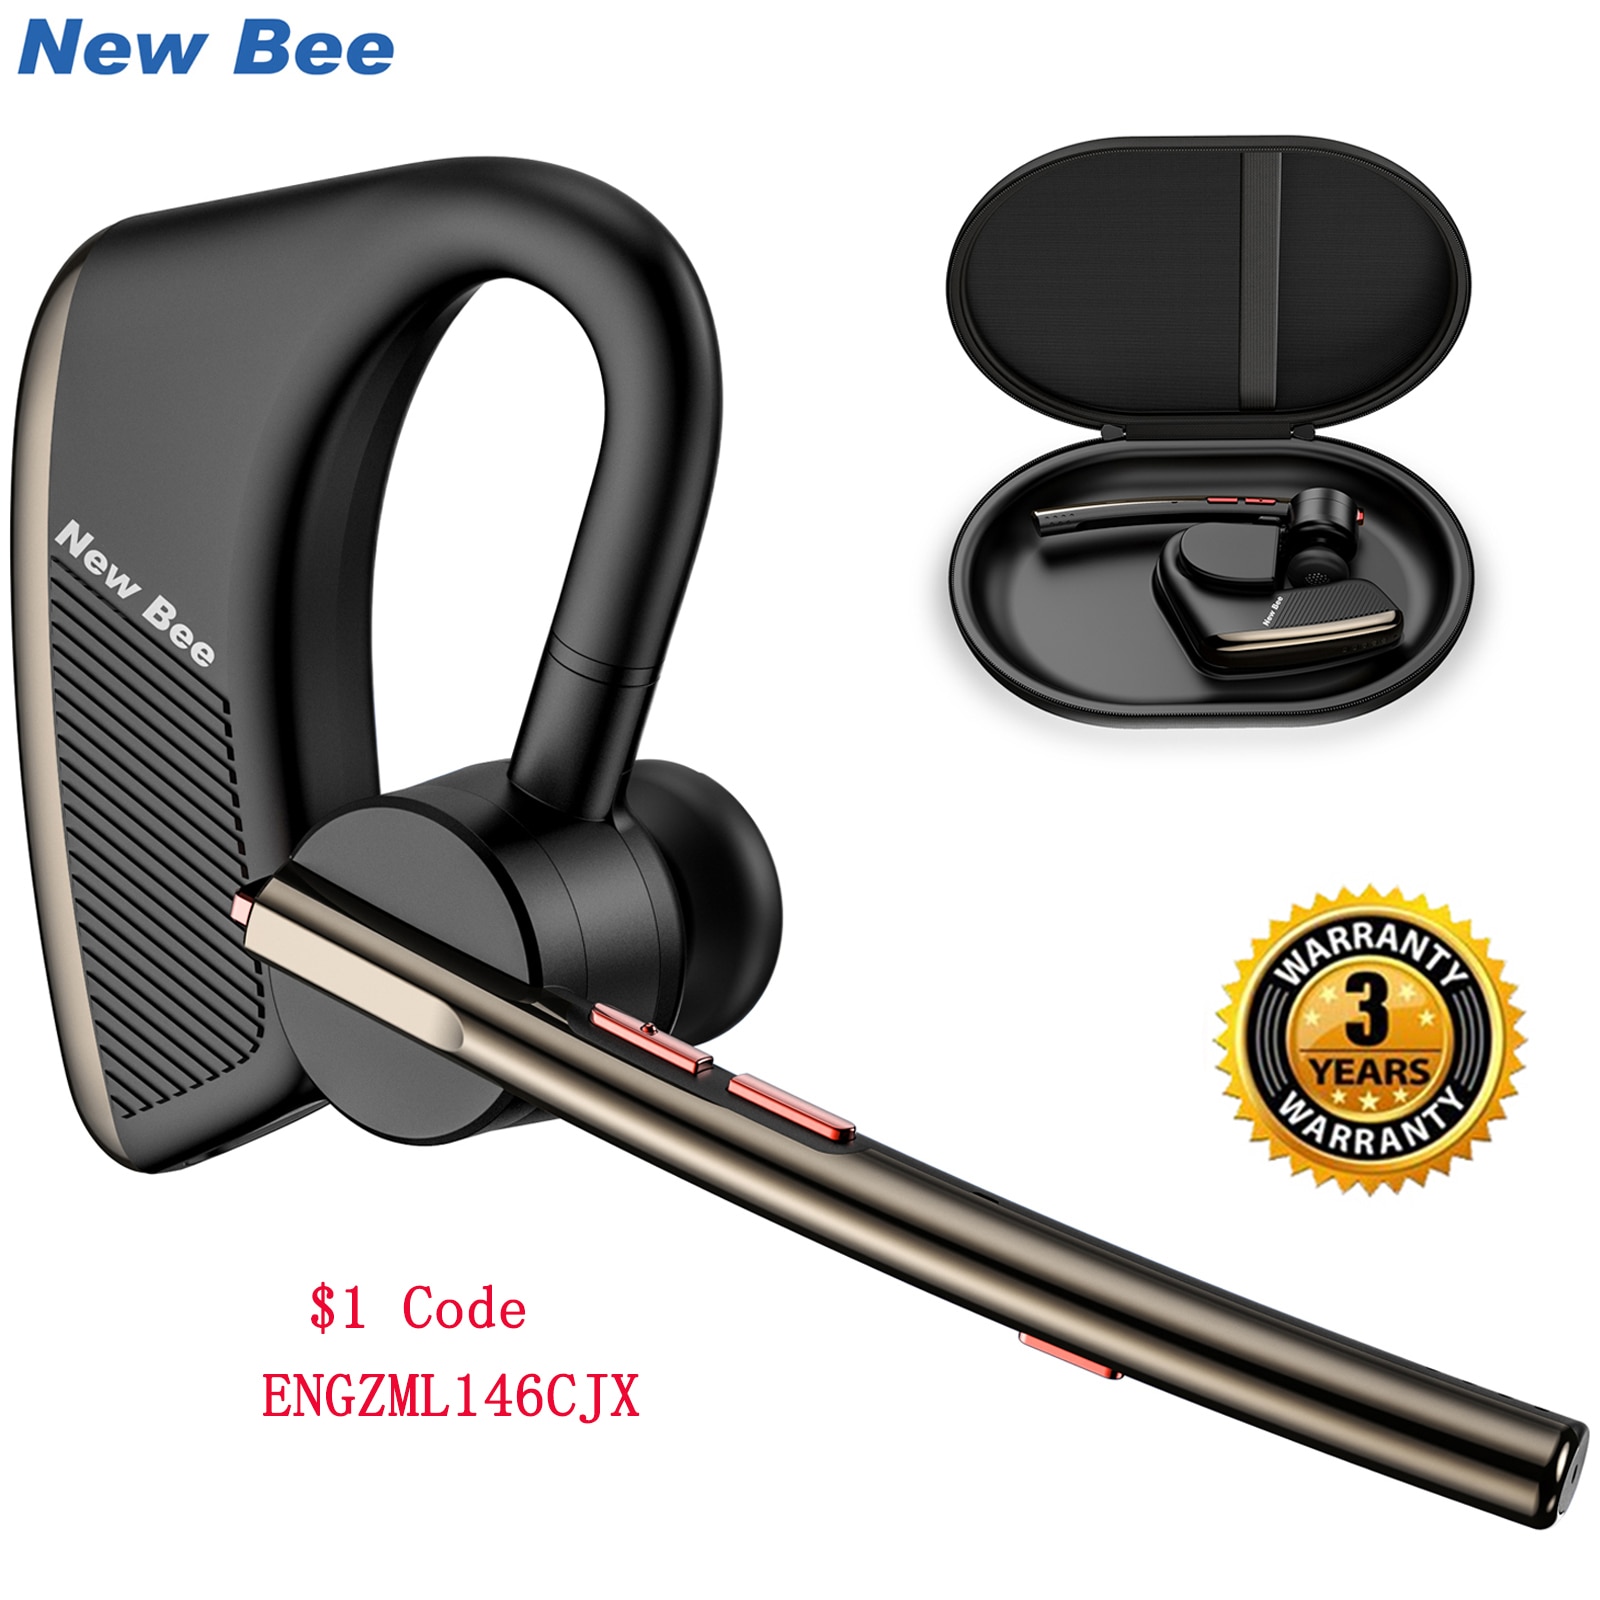 New Bee M50 Bluetooth Wireless Earbuds